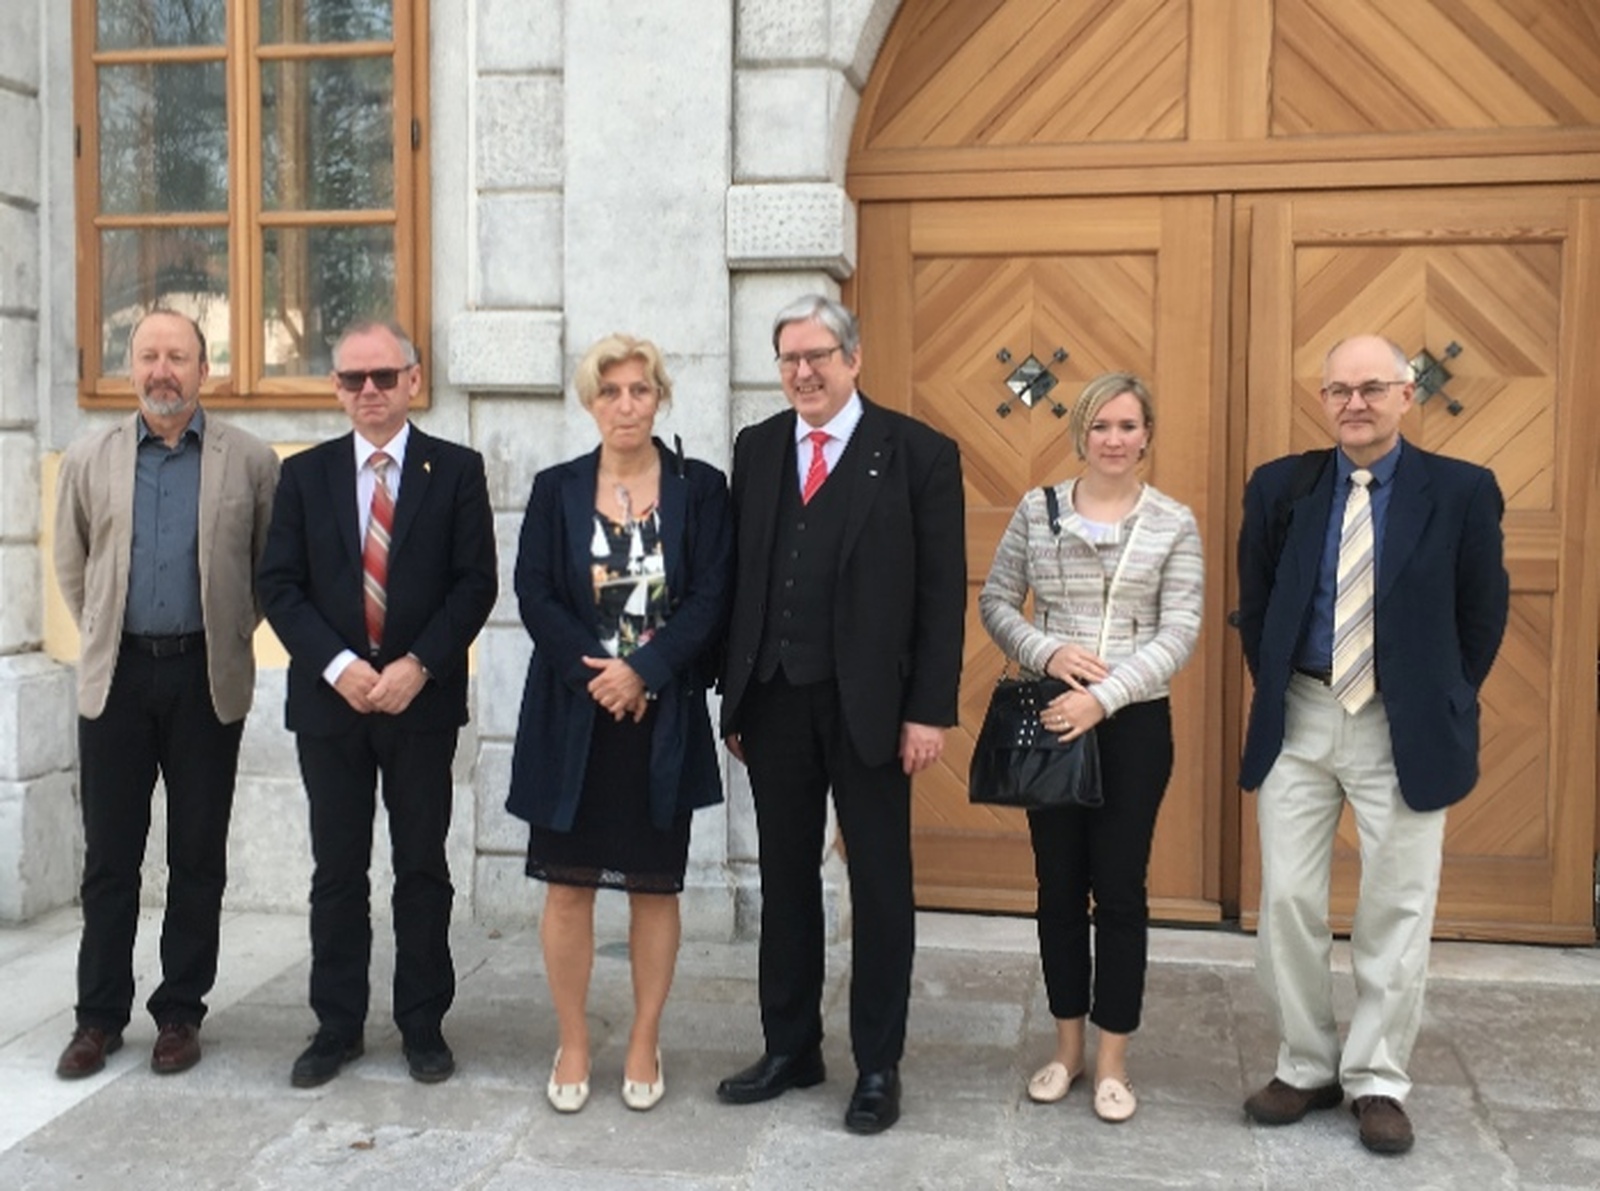 The Visit of the President of the Brandenburg University of Technology